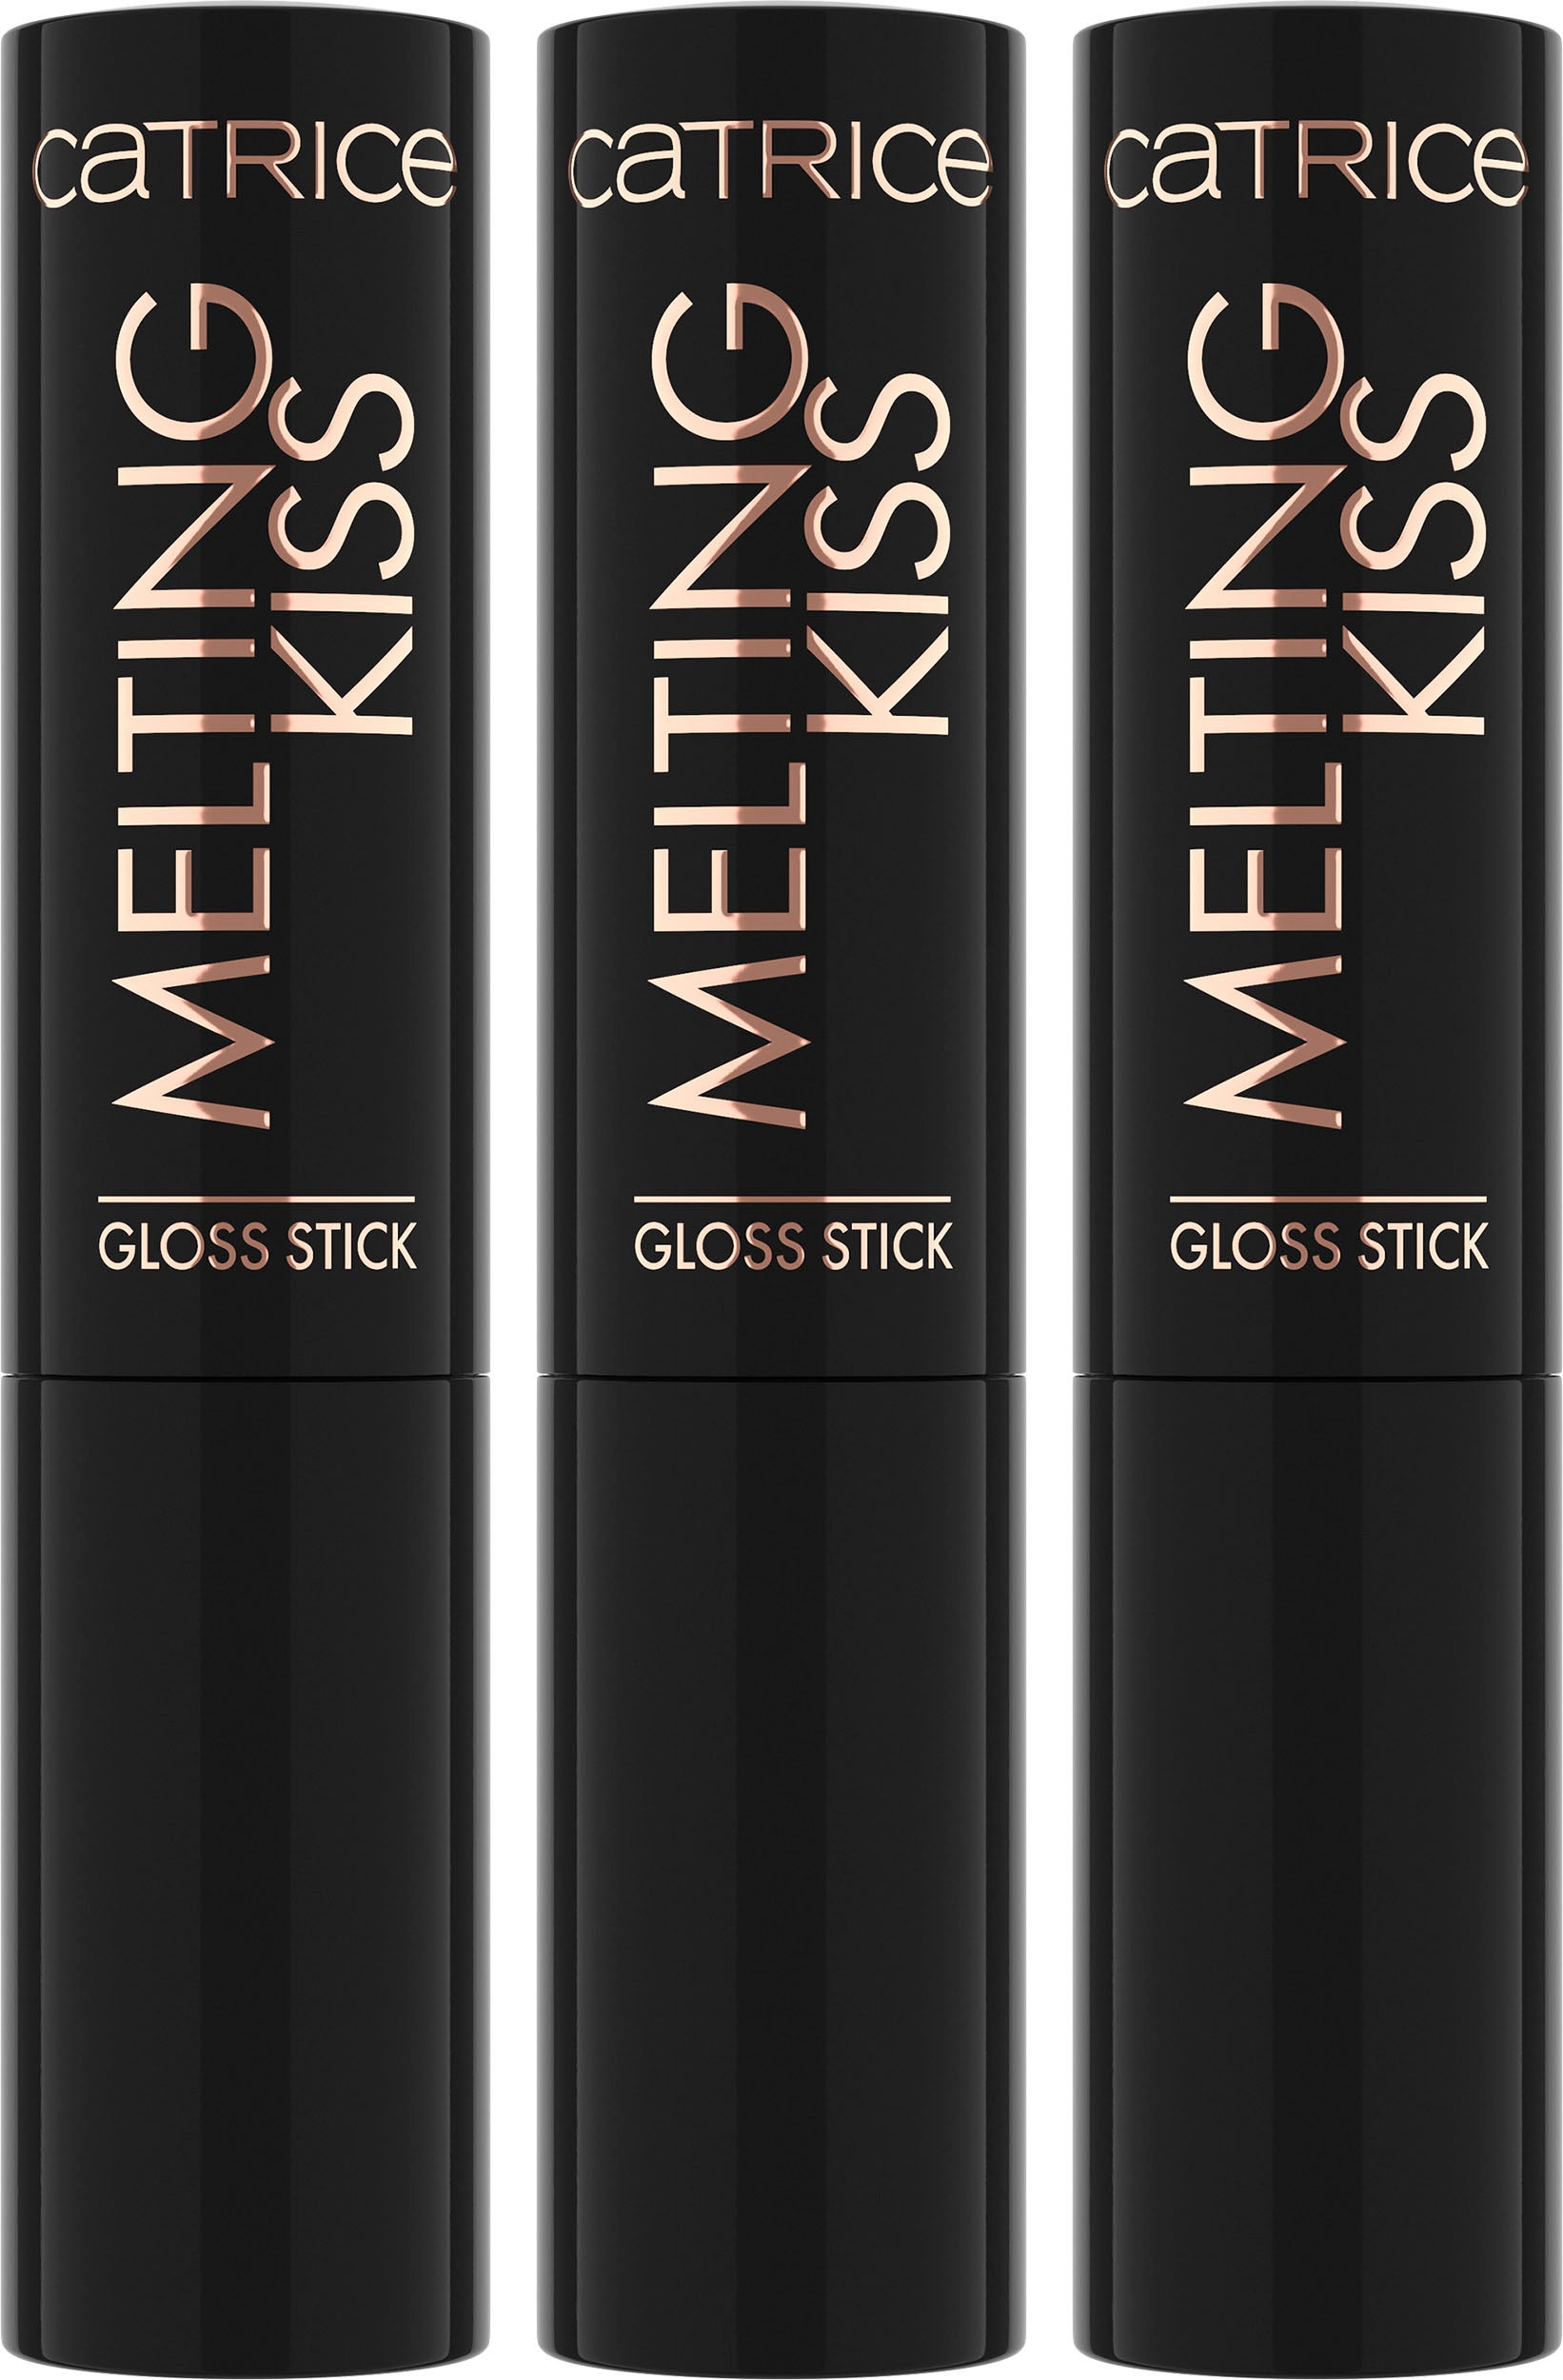 Catrice »Catrice Kiss 3 online (Set, Stick«, tlg.) Lippenstift Gloss Melting bestellen